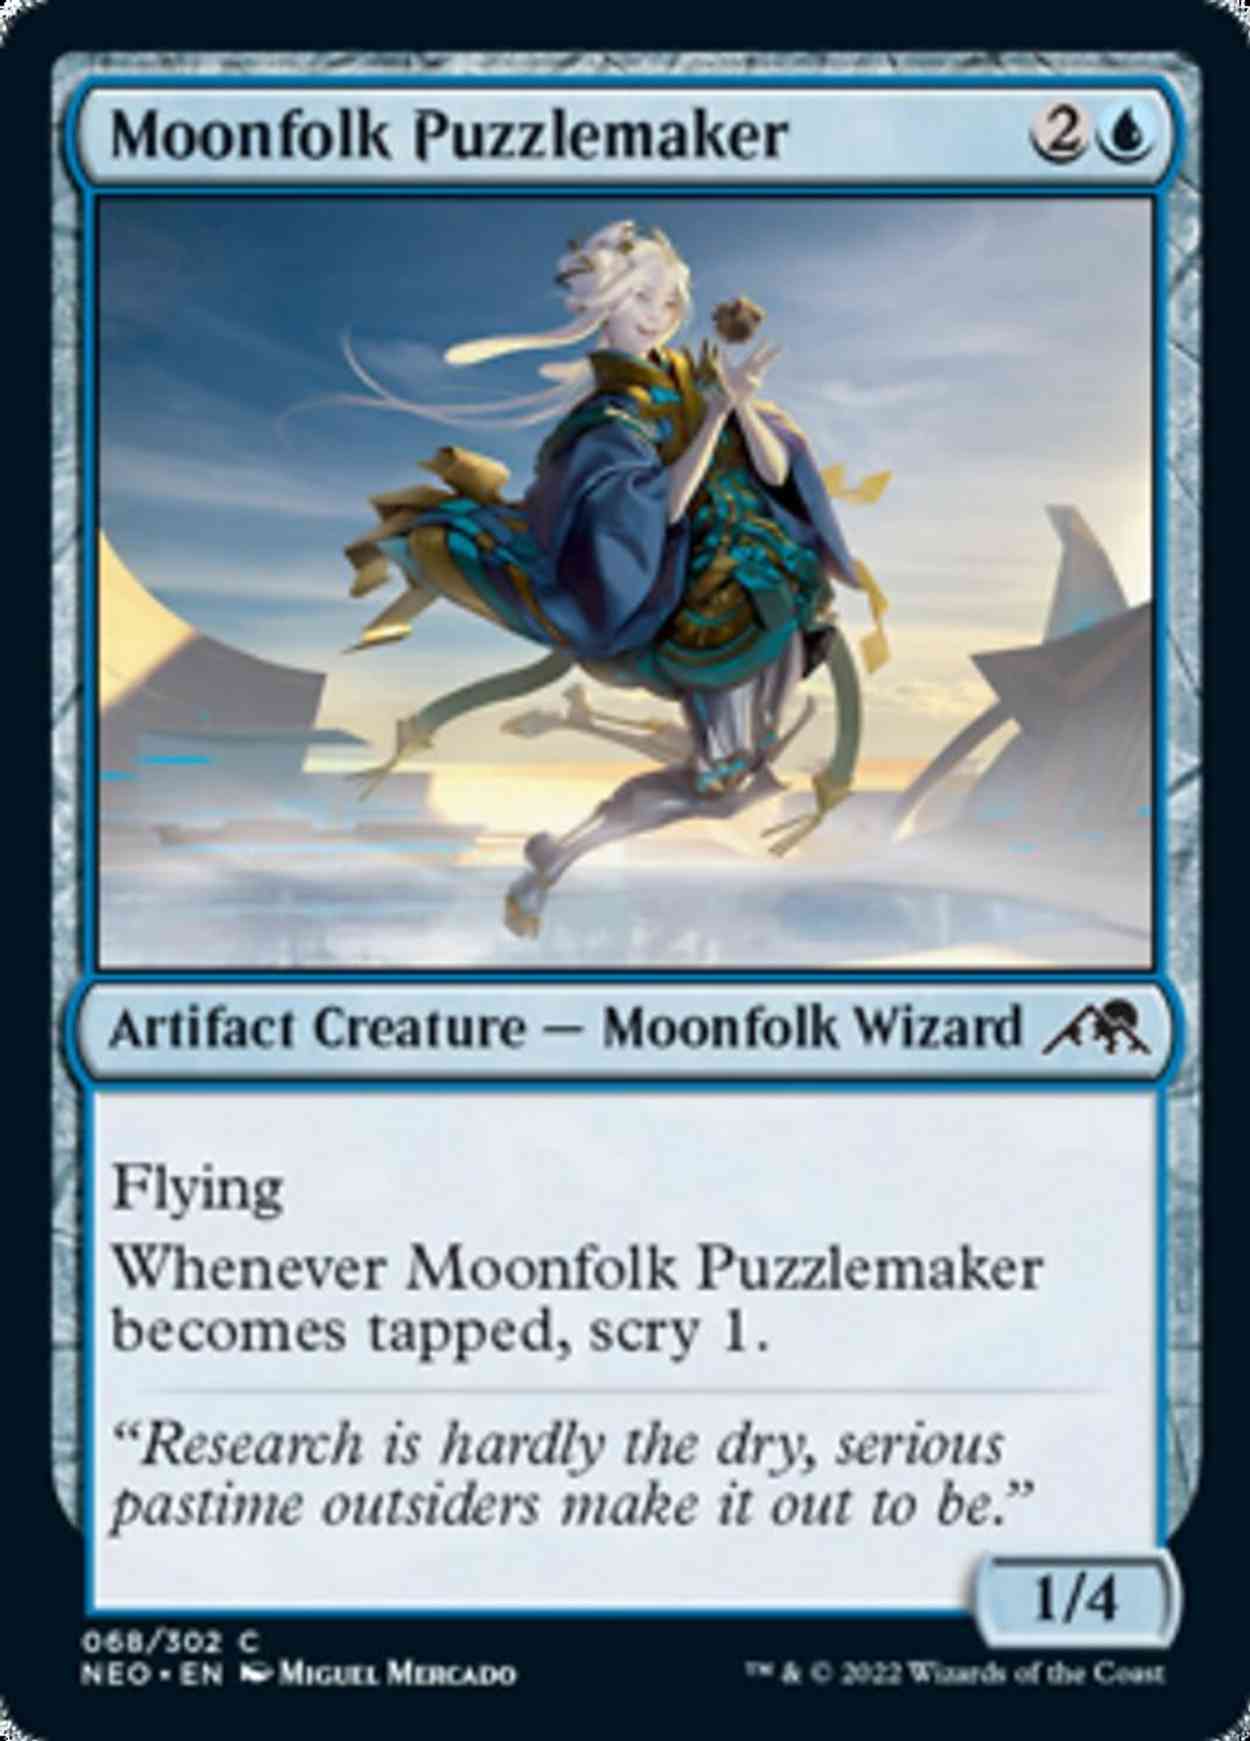 Moonfolk Puzzlemaker magic card front